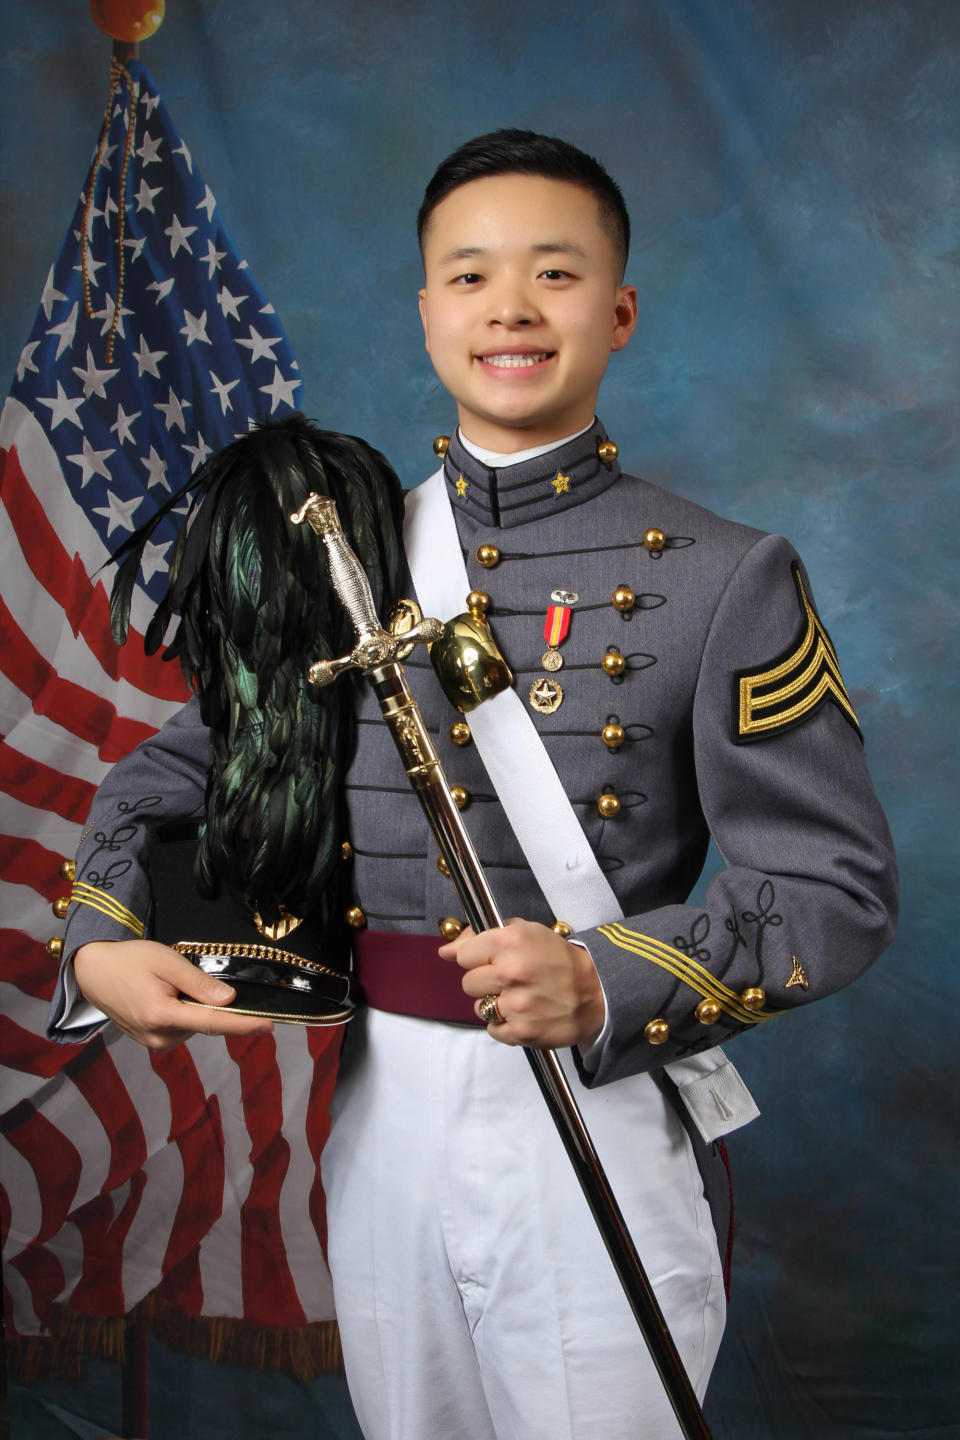 El joven Peter Zhu, fallecido el 28 de febrero de 2019, era cadete de la Academia Militar de West Point. (AP)